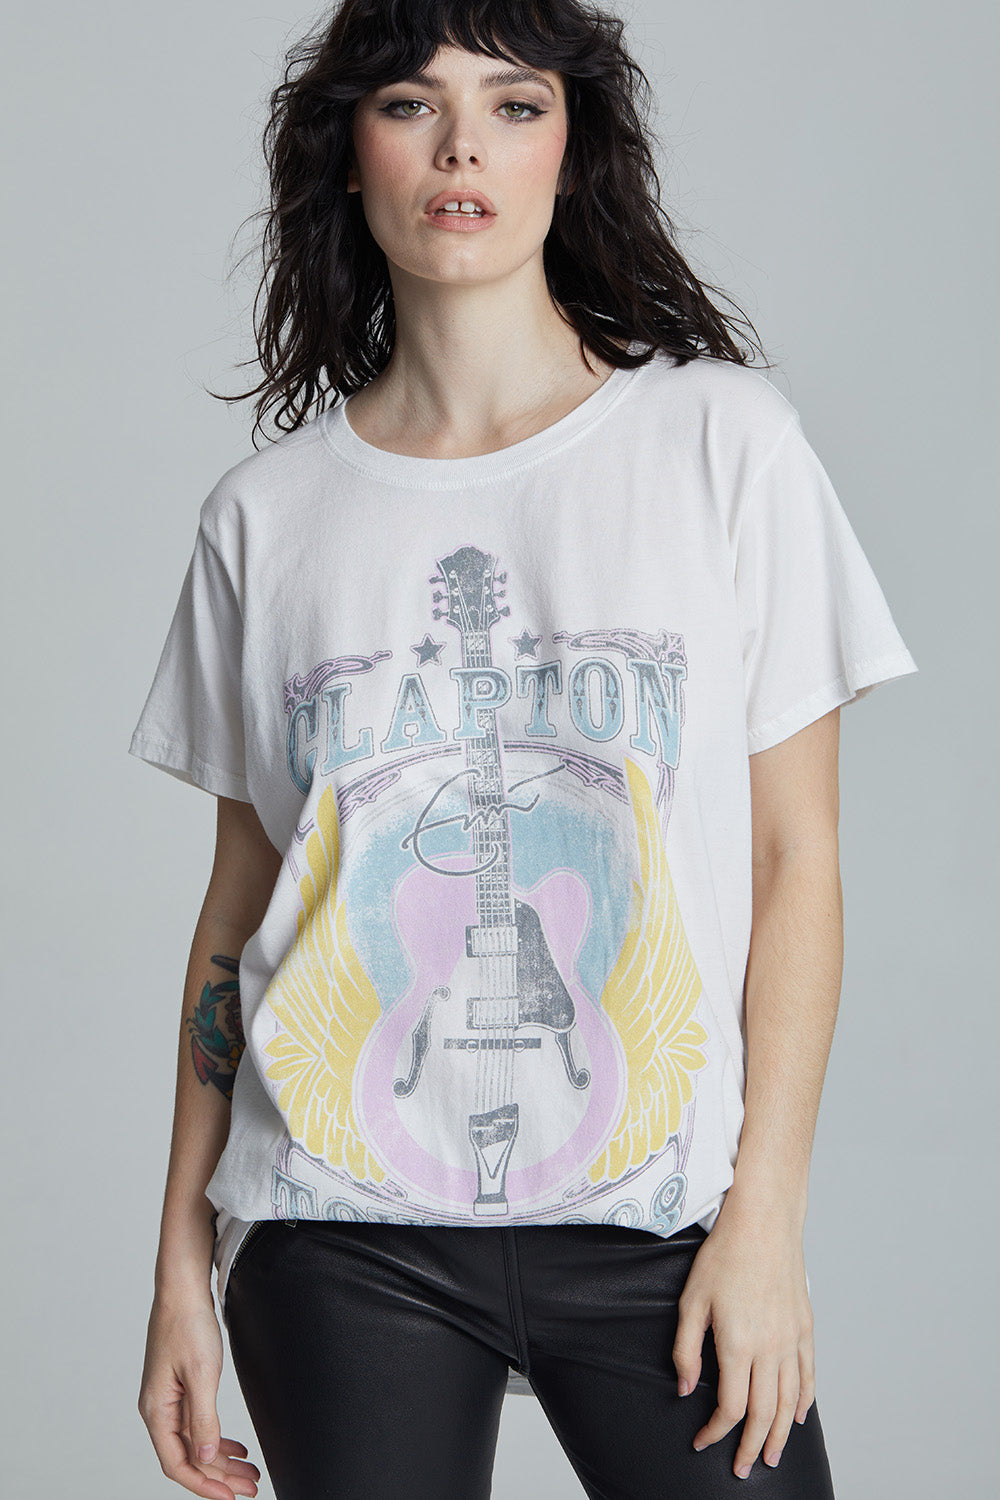 Eric Clapton 2008 Tour T-Shirt